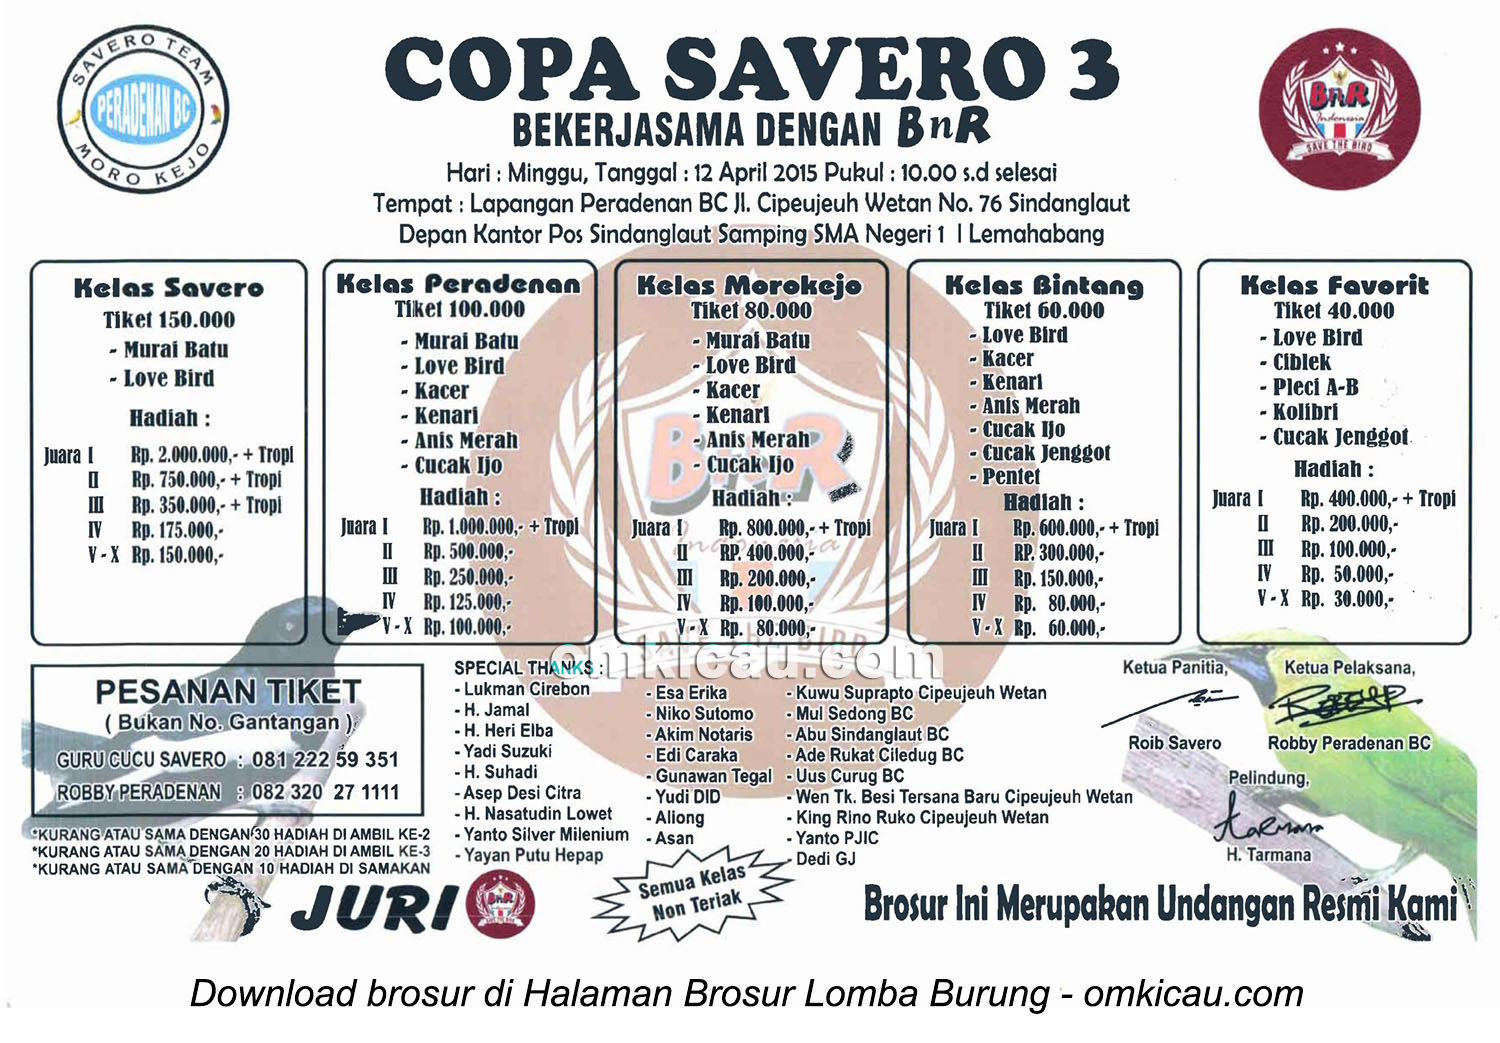 Brosur Lomba Burung Berkicau Copa Savero 3, Cirebon, 12 April 2015